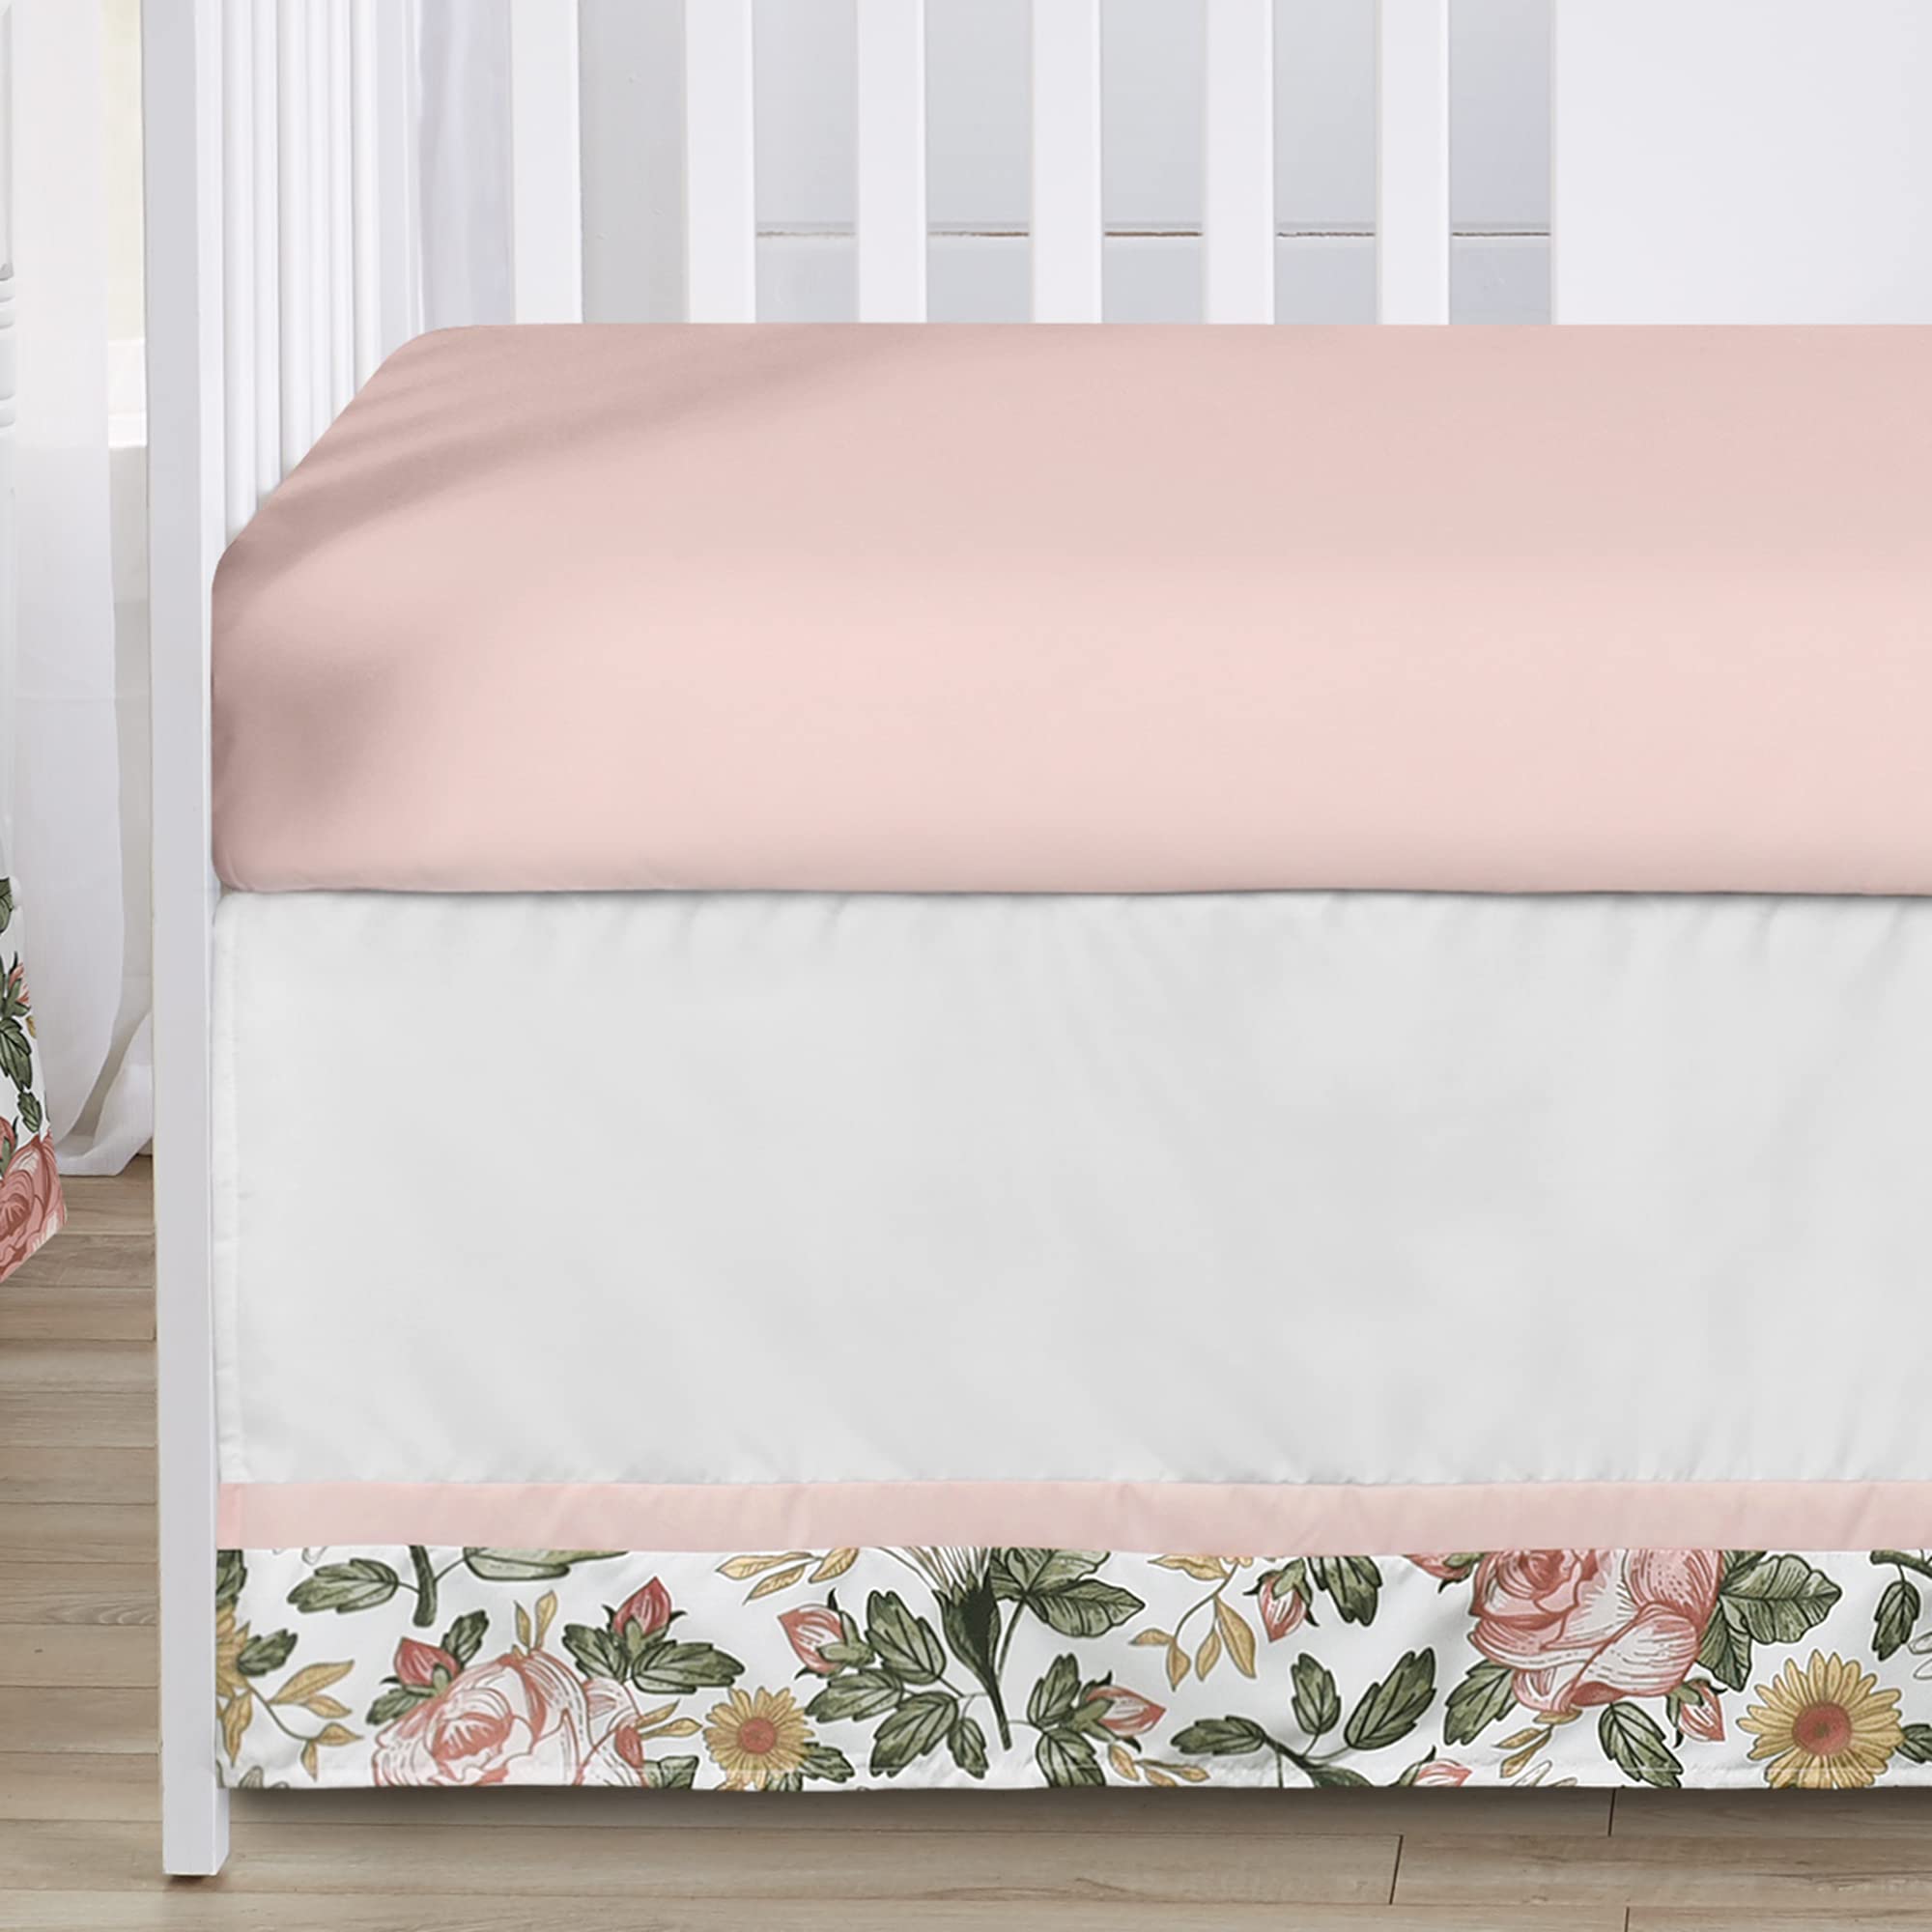 Sweet Jojo Designs Vintage Floral Boho Baby Girl Nursery Crib Bedding Set - 4 Pieces - Blush Pink, Yellow, Green and White Shabby Chic Rose Flower Farmhouse